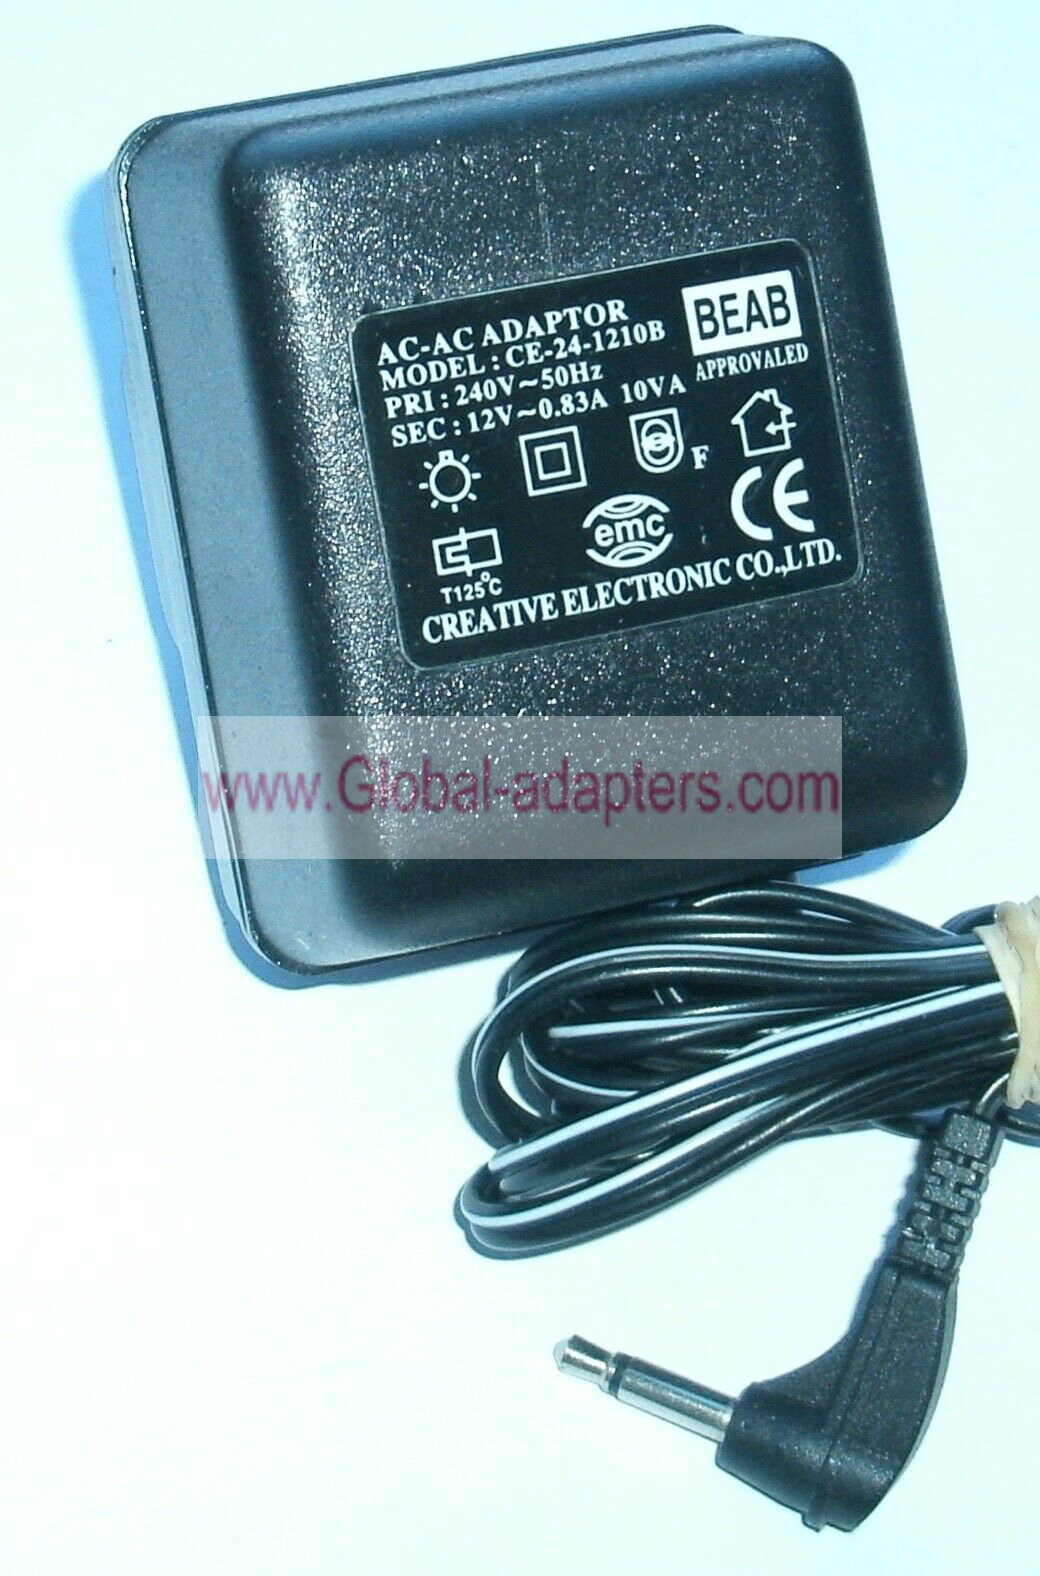 New Creative 12V 0.83A 10VA AC-AC Adaptor CE-24-1210B power supply Charger